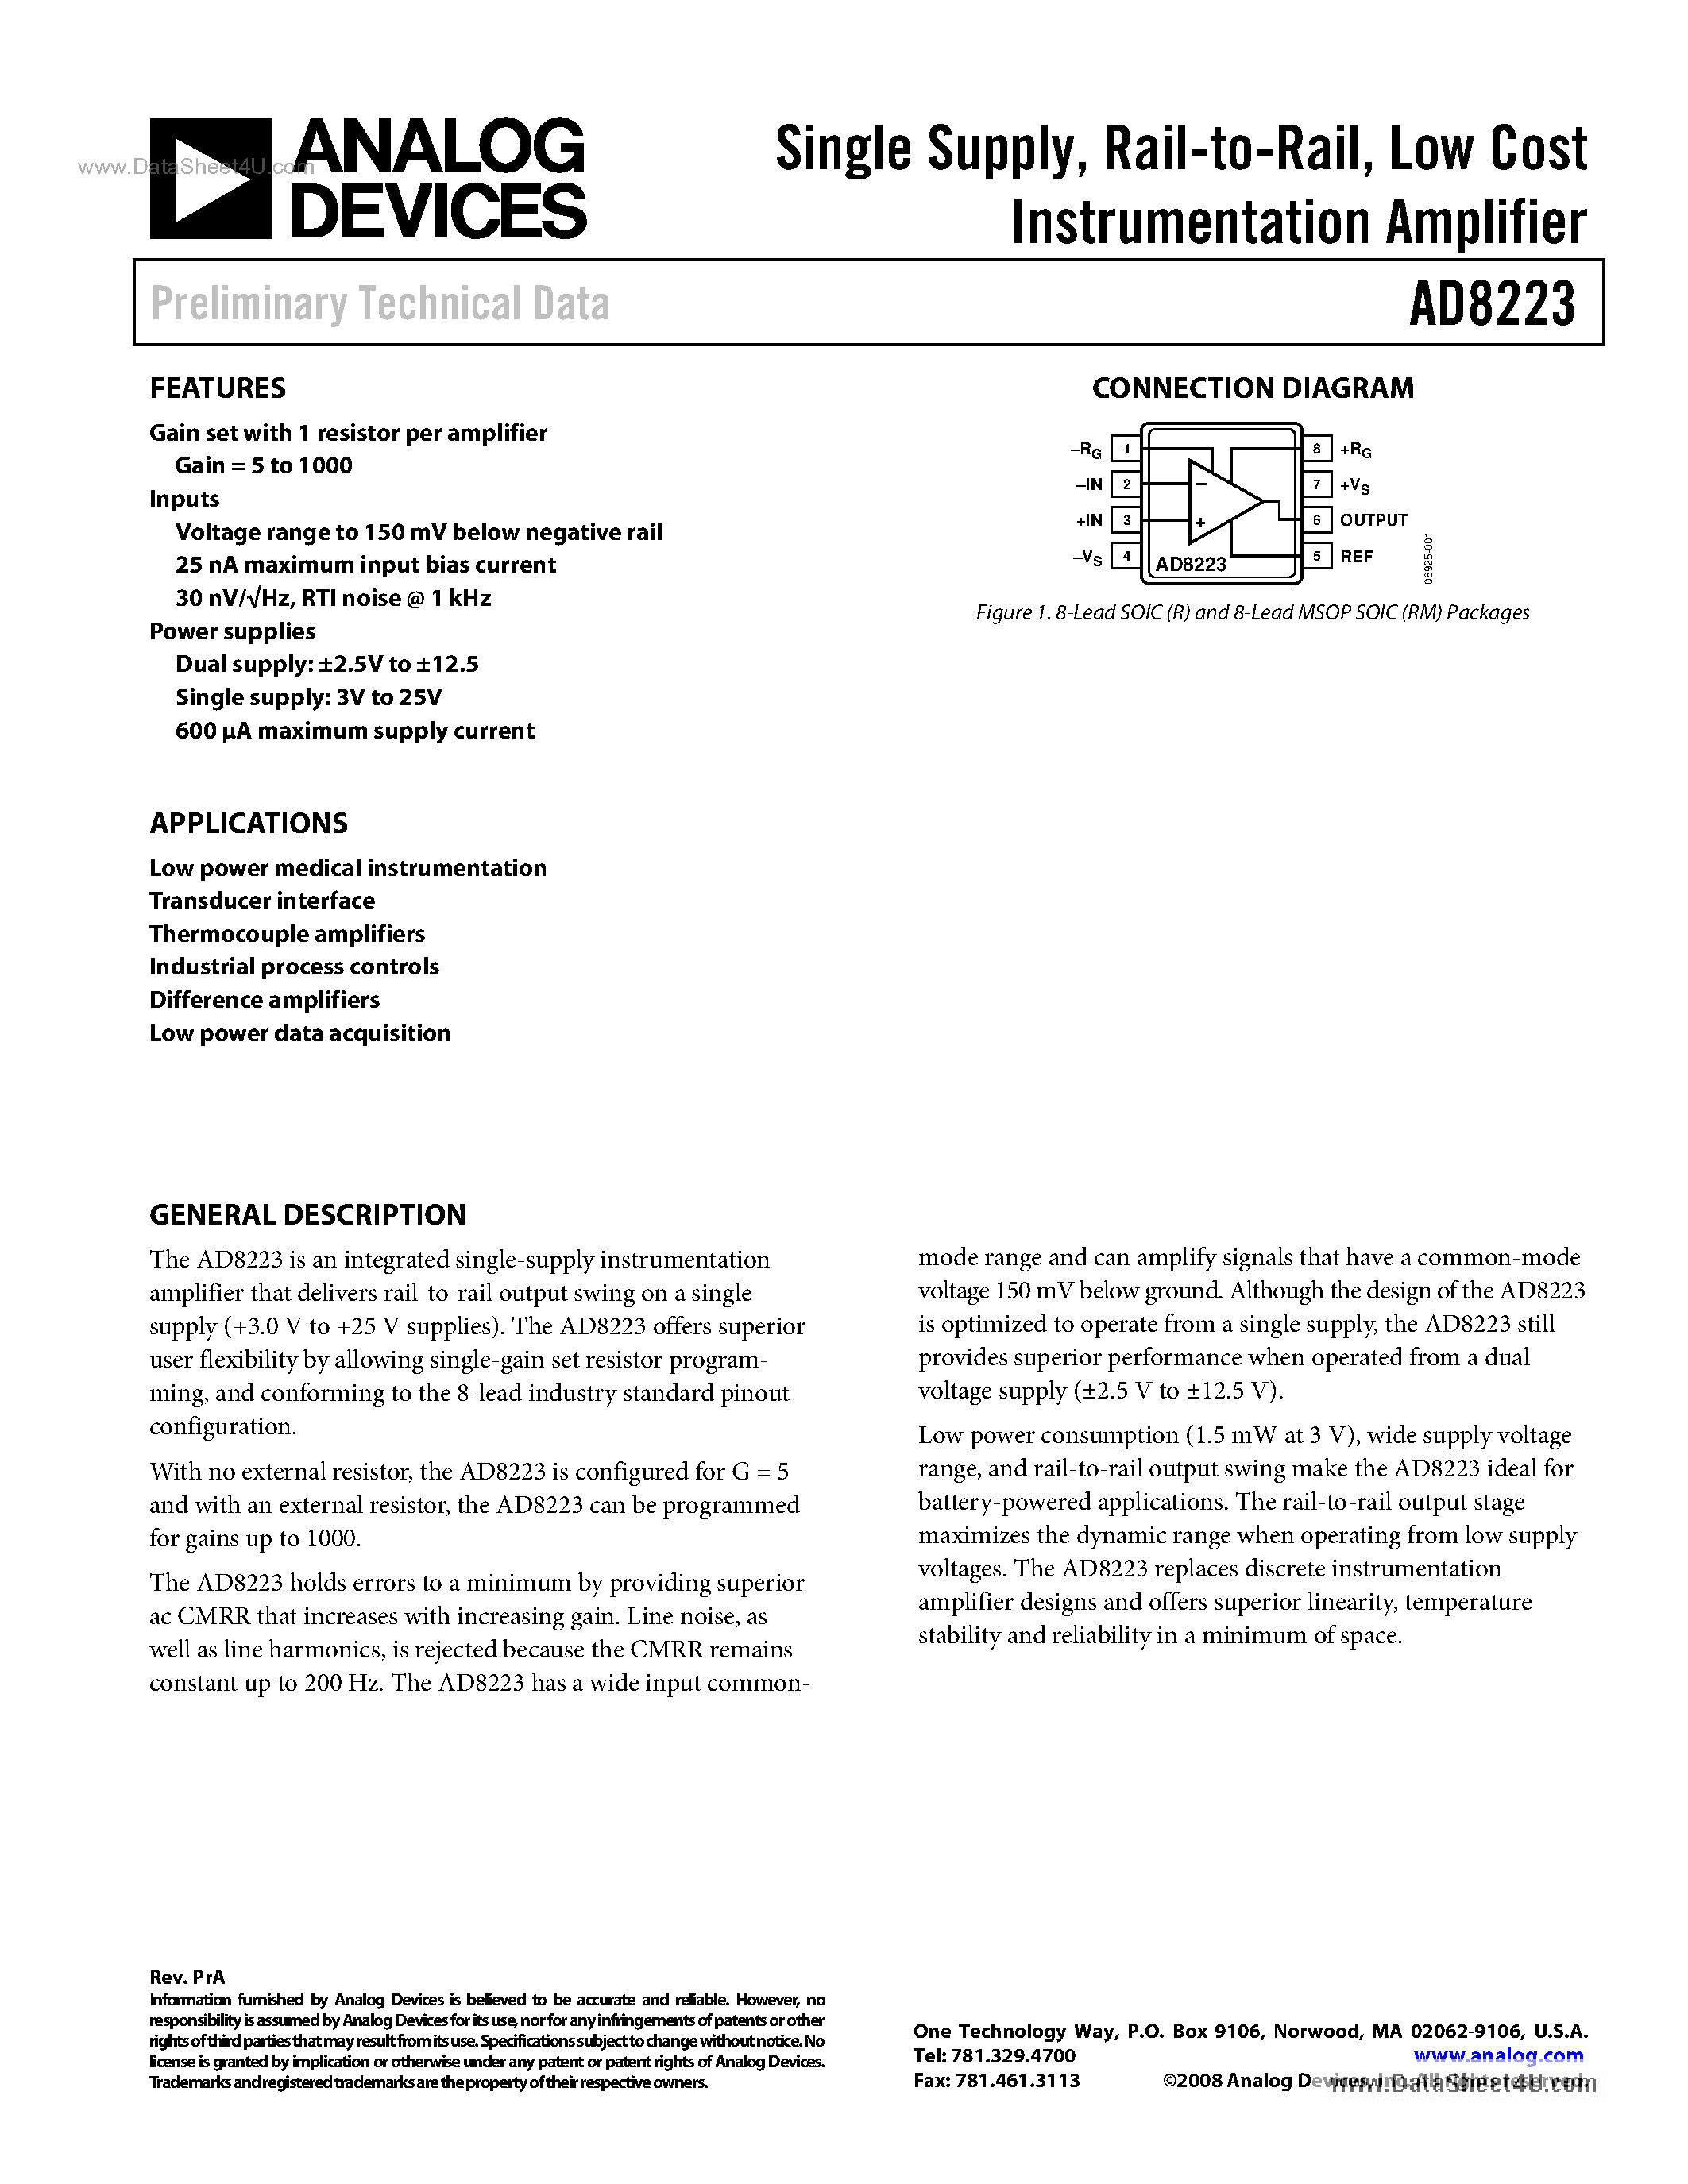 Даташит AD8223 - Low Cost Instrumentation Amplifier страница 1